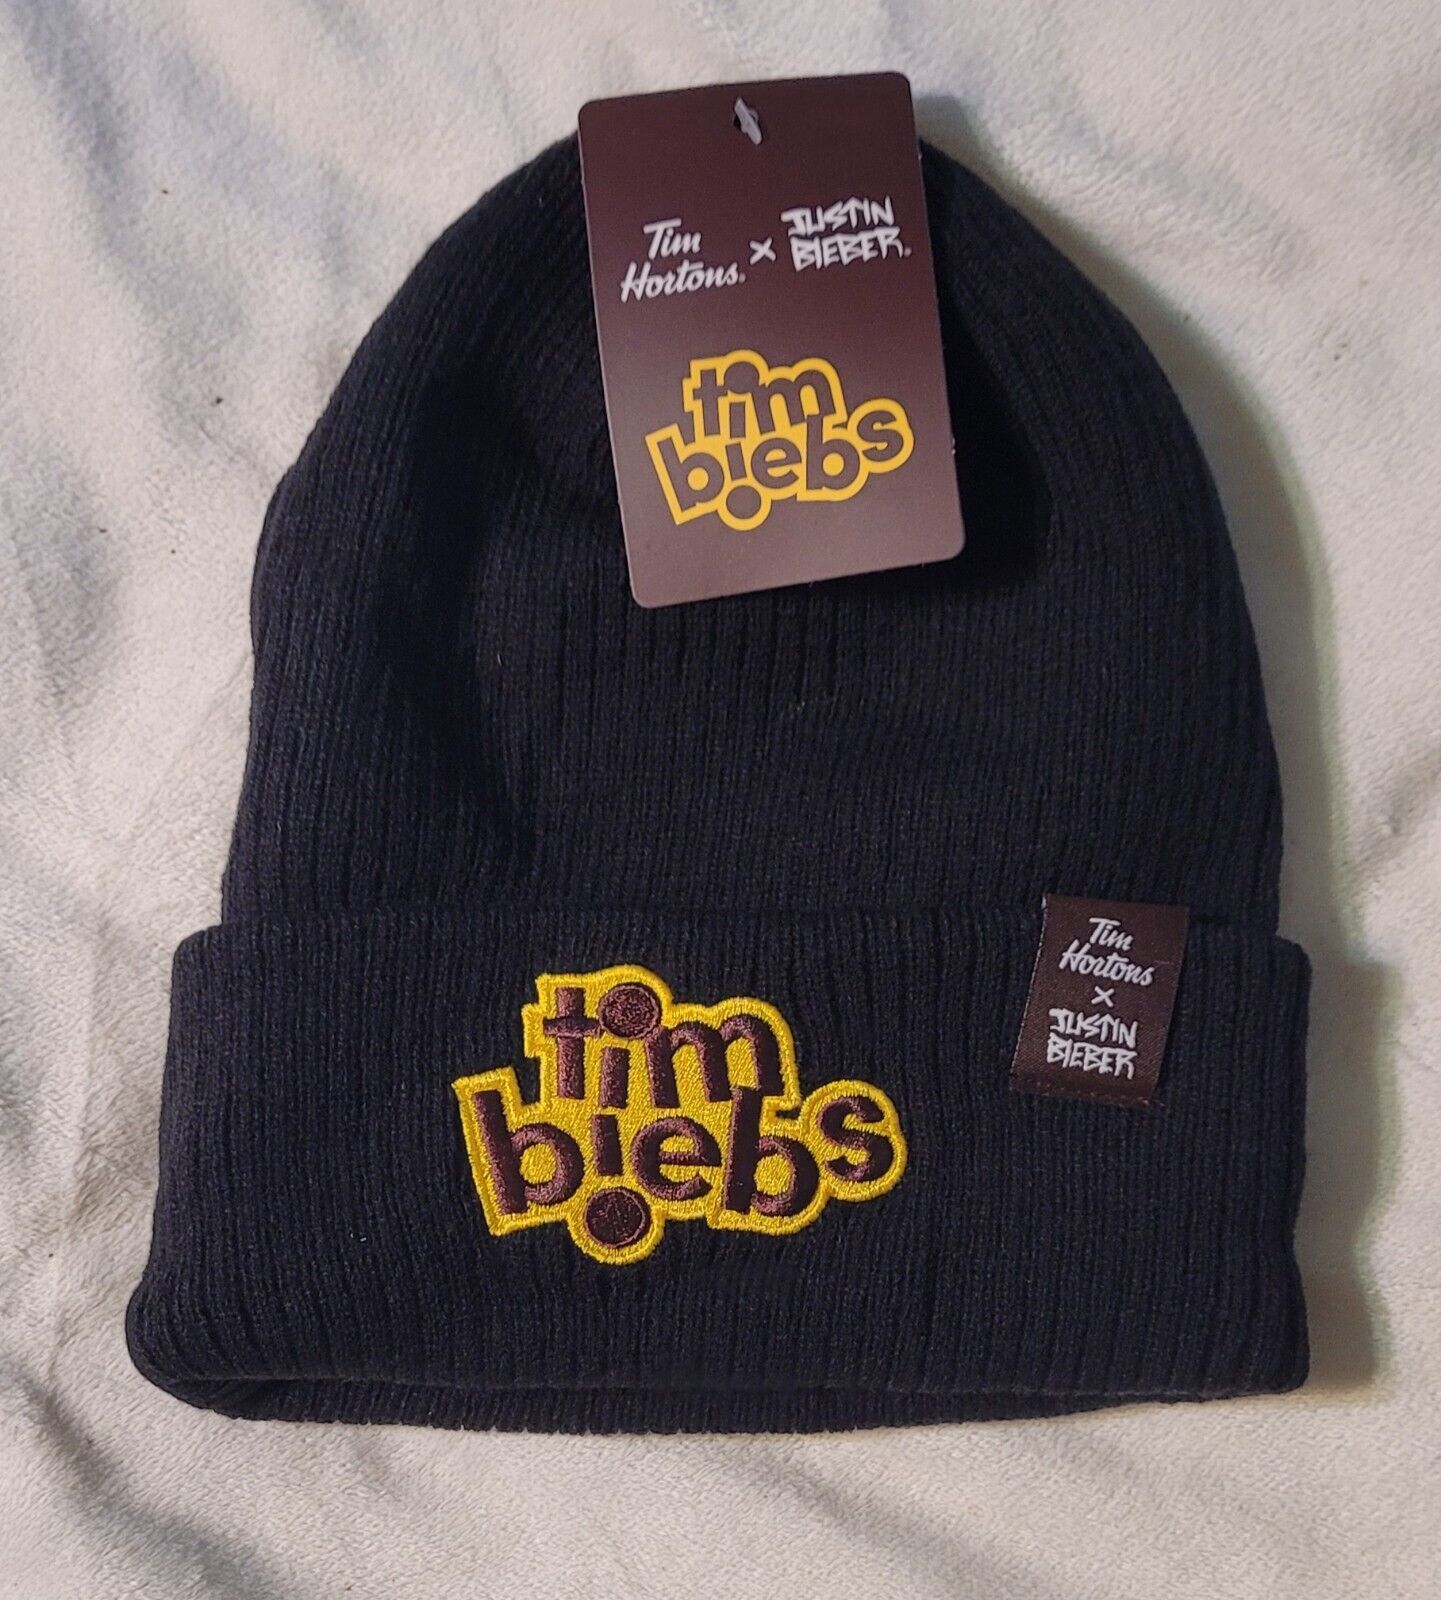 JUSTIB BIEBER x Tim Hortons BIEBS Black Beanie Hat Limited Edition SEALED